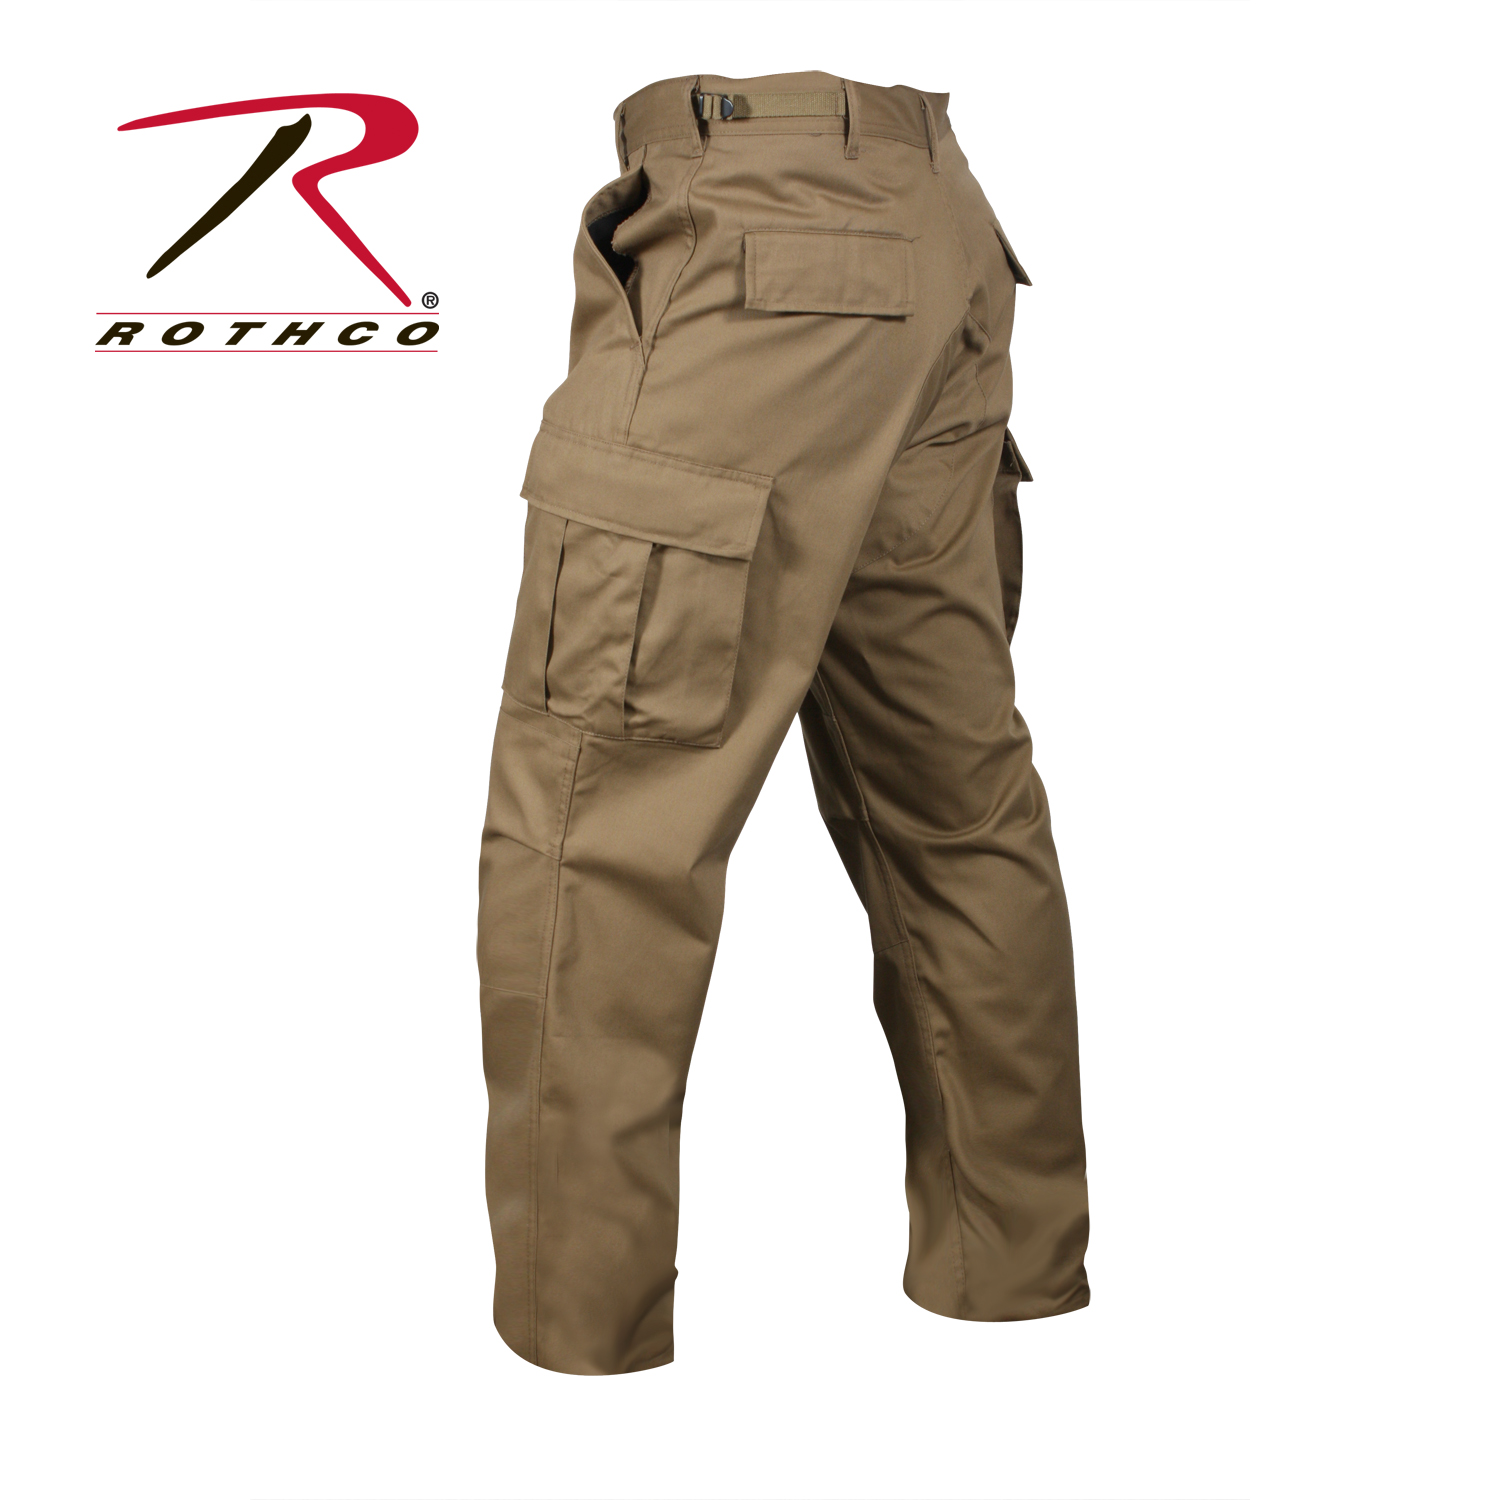 8522 Rothco Men's Coyote Brown BDU Pants | eBay